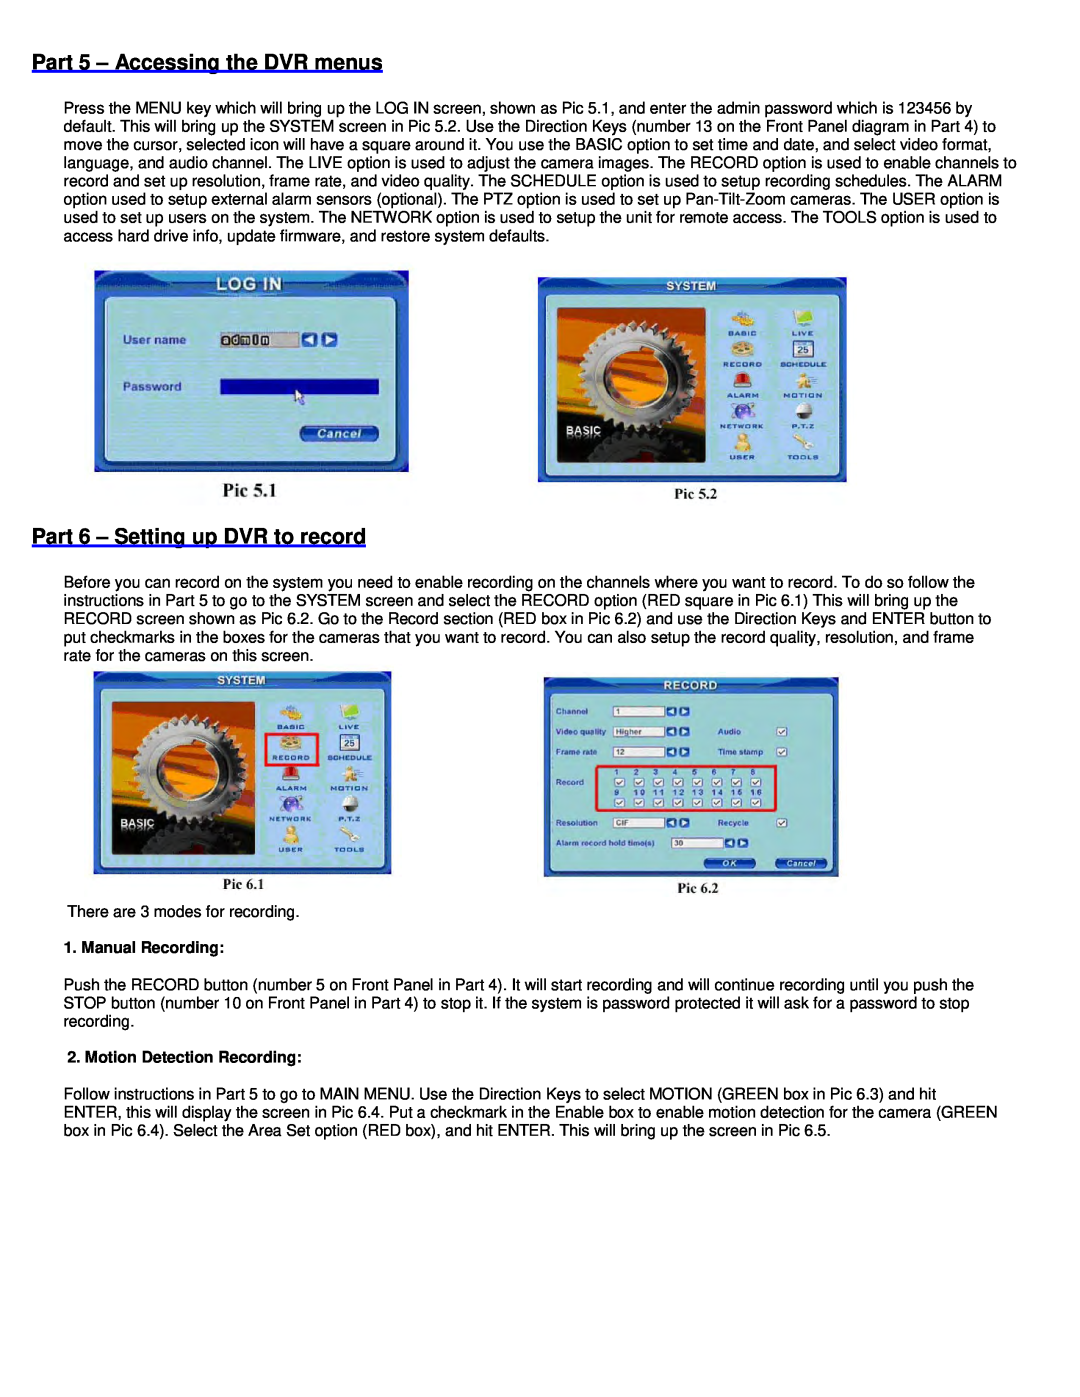 Q-See QT208-818 manual Part 5 - Accessing the DVR menus, Part 6 - Setting up DVR to record, Manual Recording 